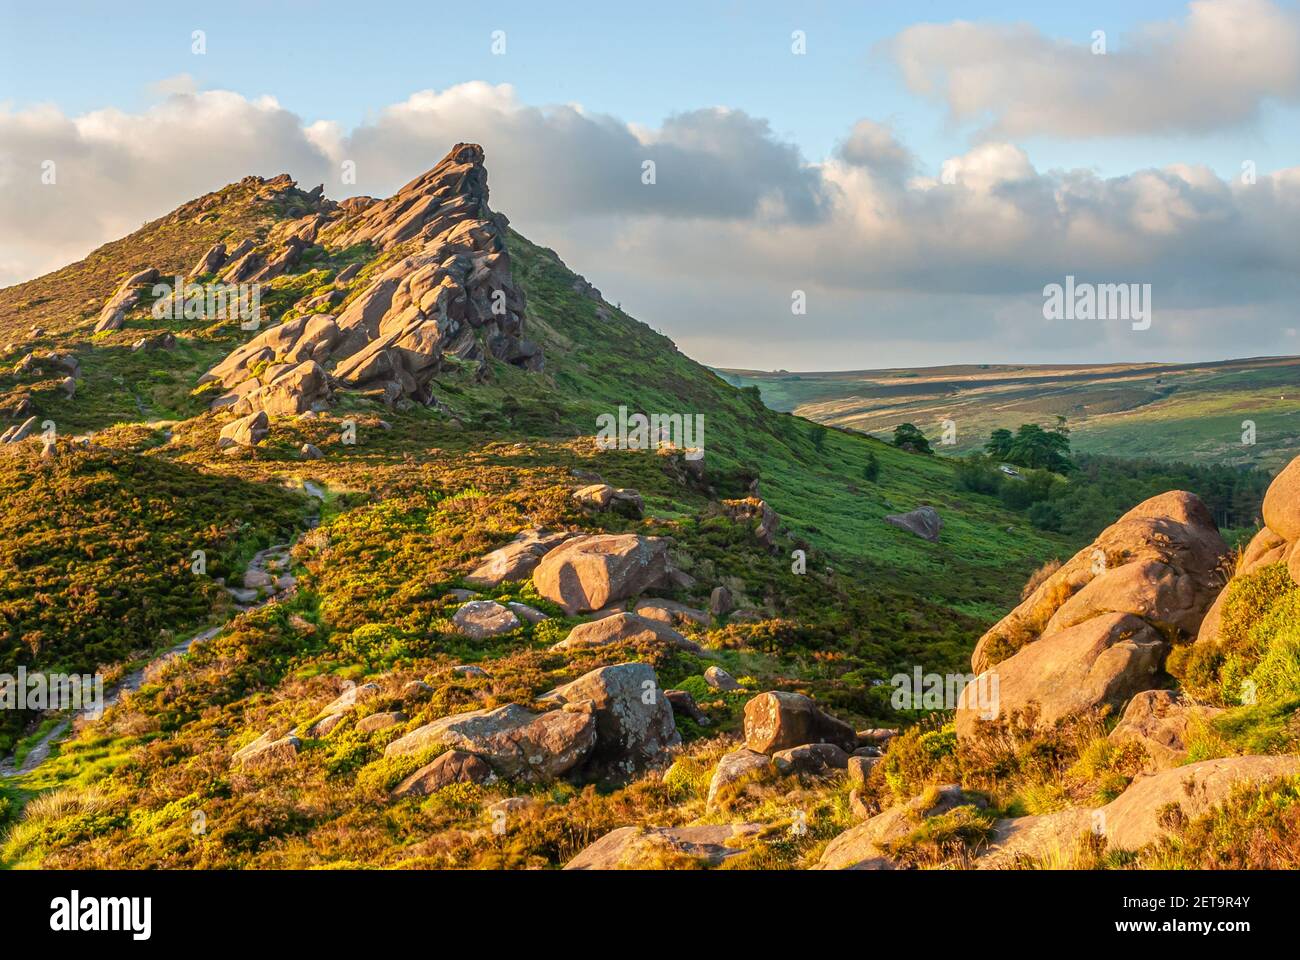 Ramshaw Rocks in der Nähe der Roaches Rock Formation, Peak District, Staffordshire, England bei Sonnenuntergang. Stockfoto